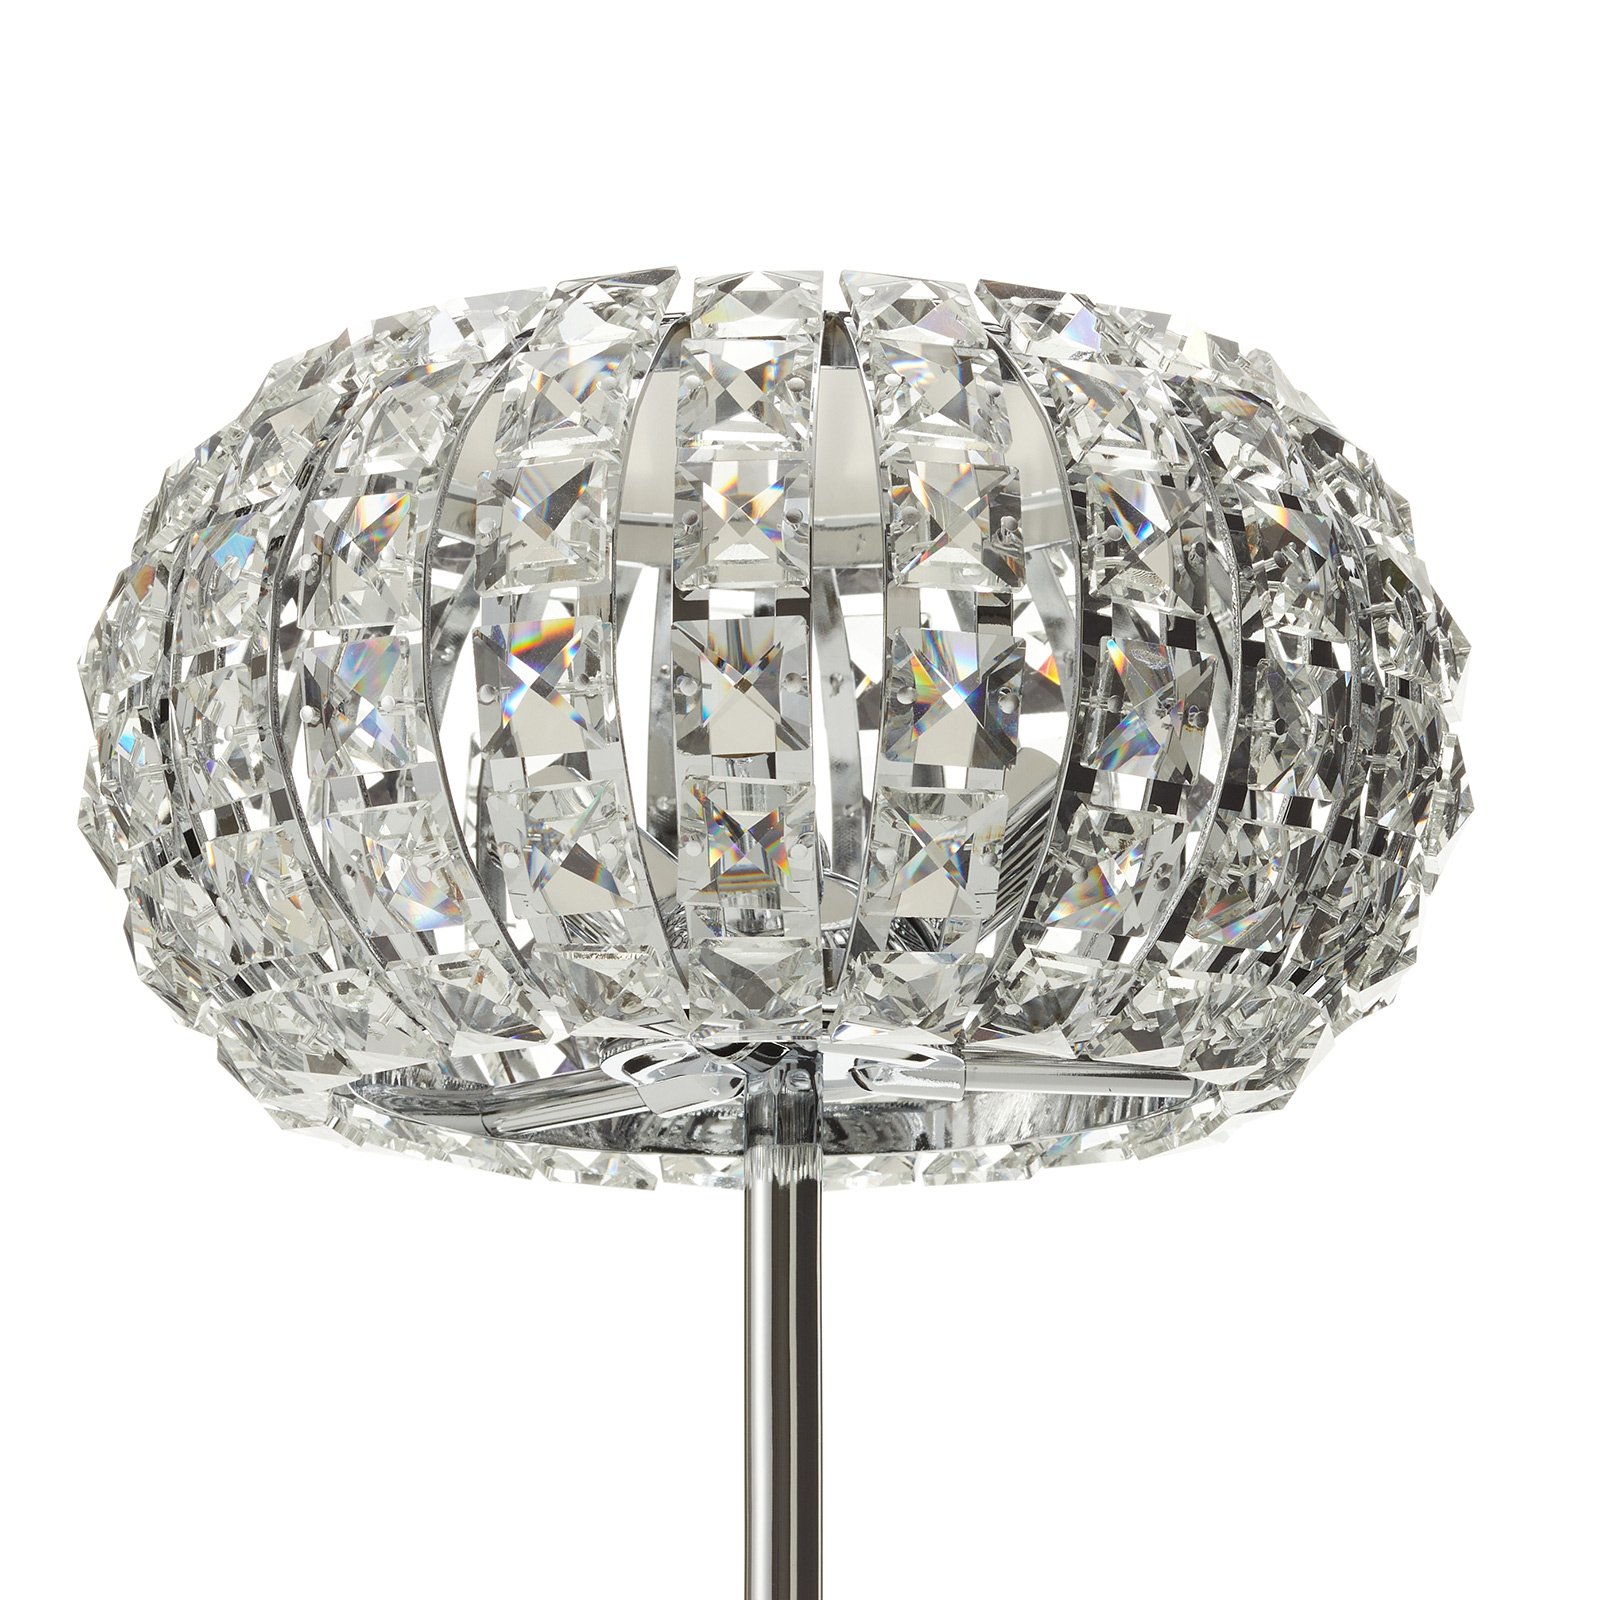 Tafellamp DIAMOND met kristallen, 24 cm